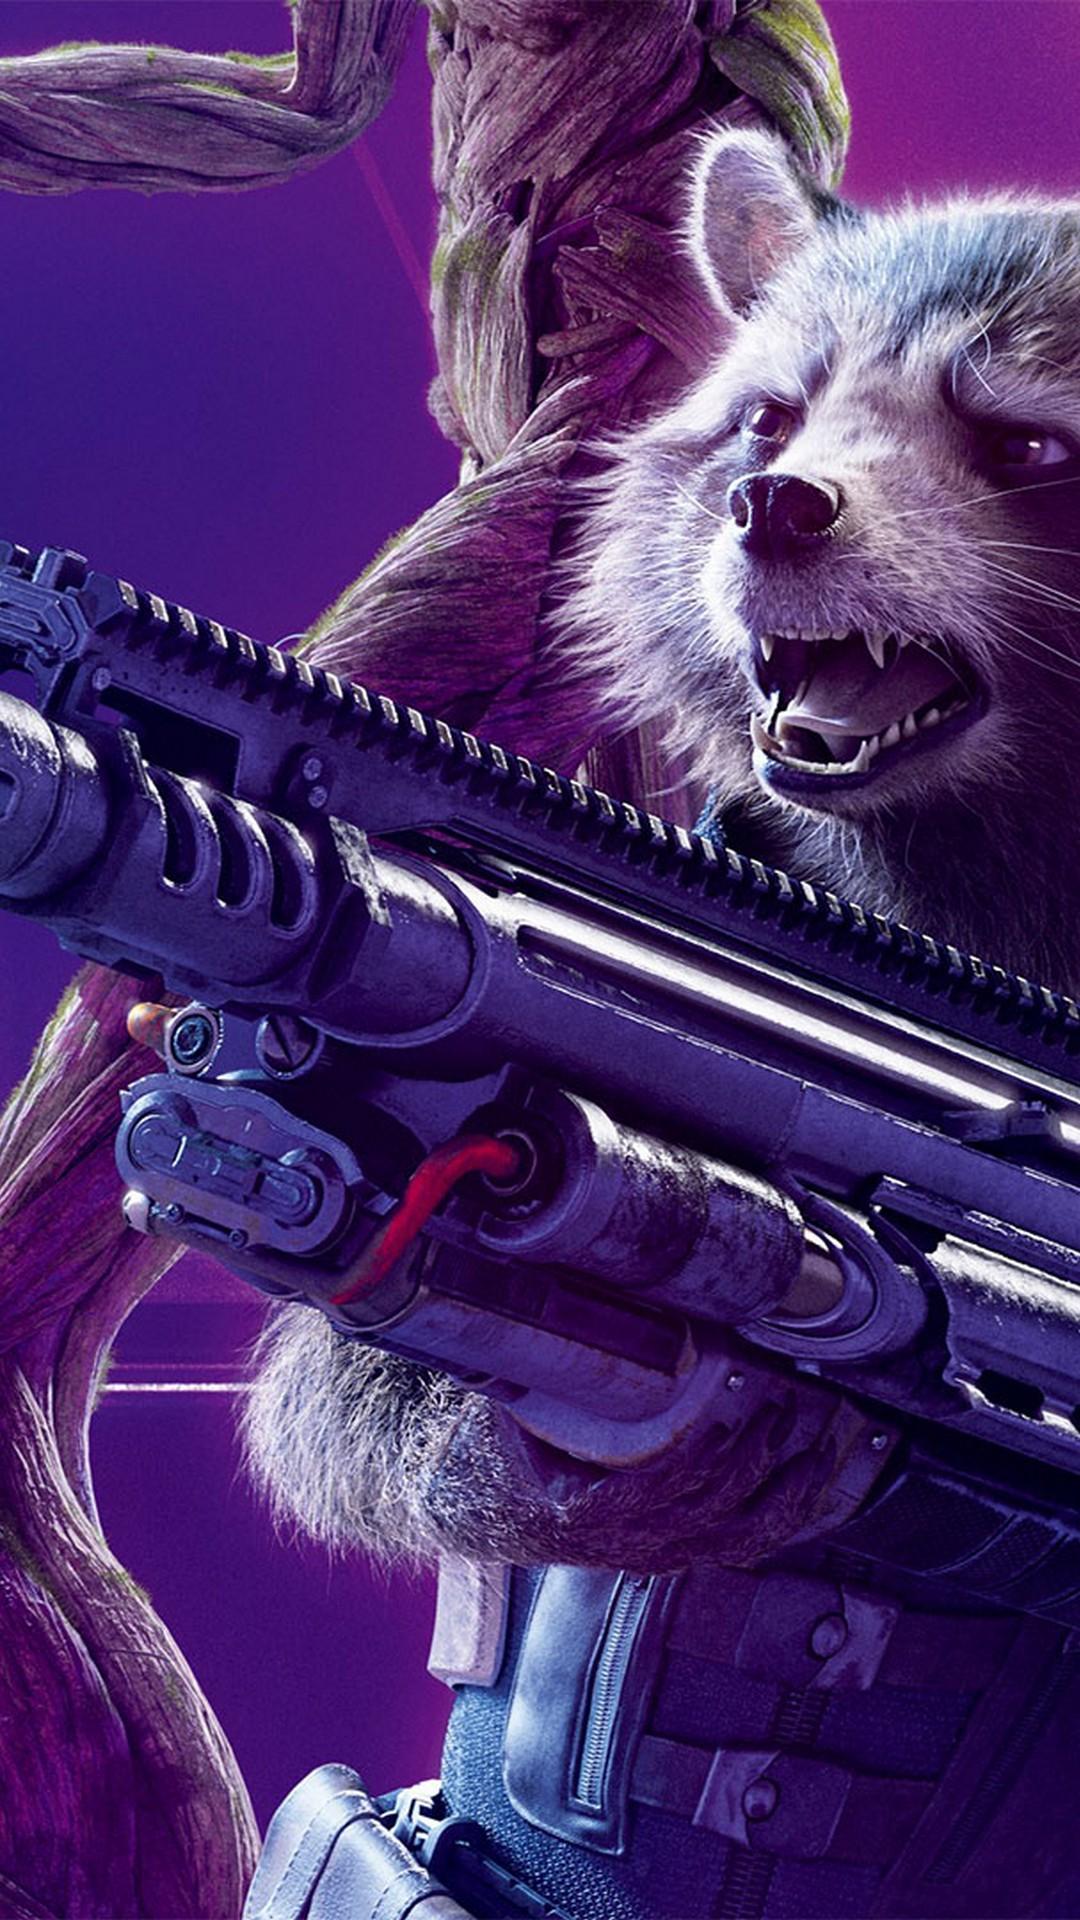 Rocket Raccoon Avengers Endgame iPhone Wallpaper Movie Poster